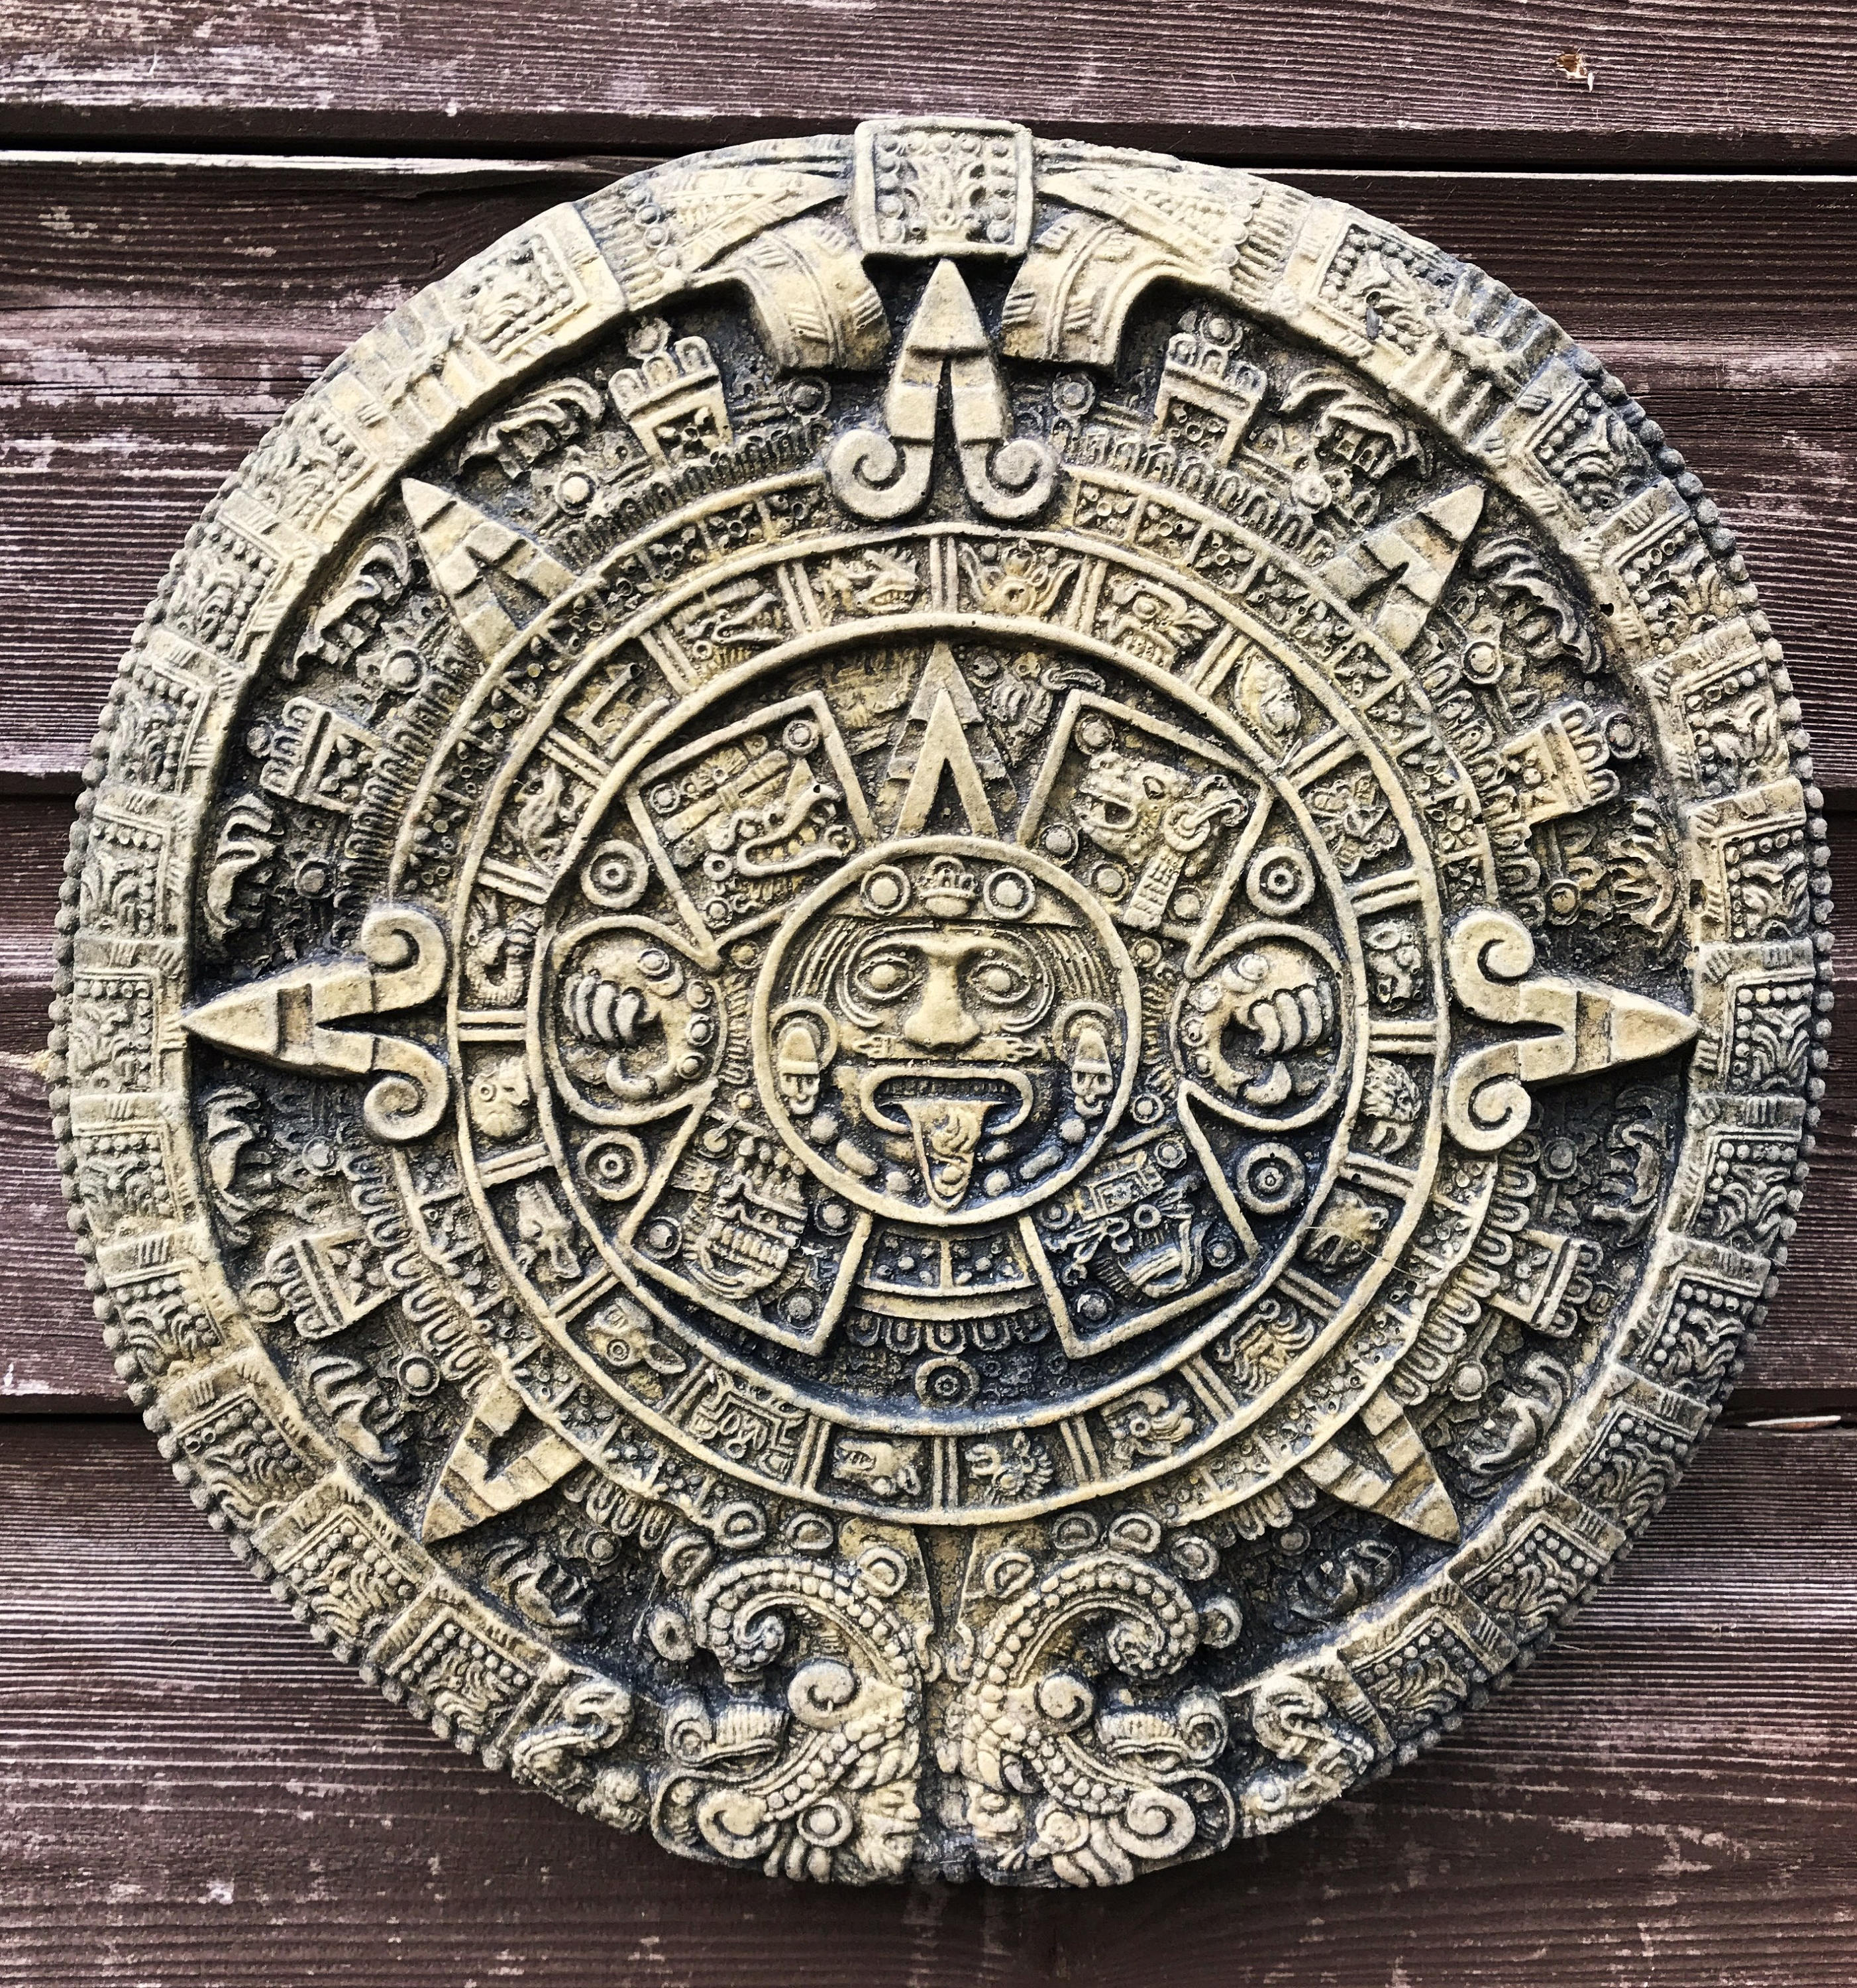 Aztec Calendar Stone Aztec Empire Maya Civilization Mayan Calendar